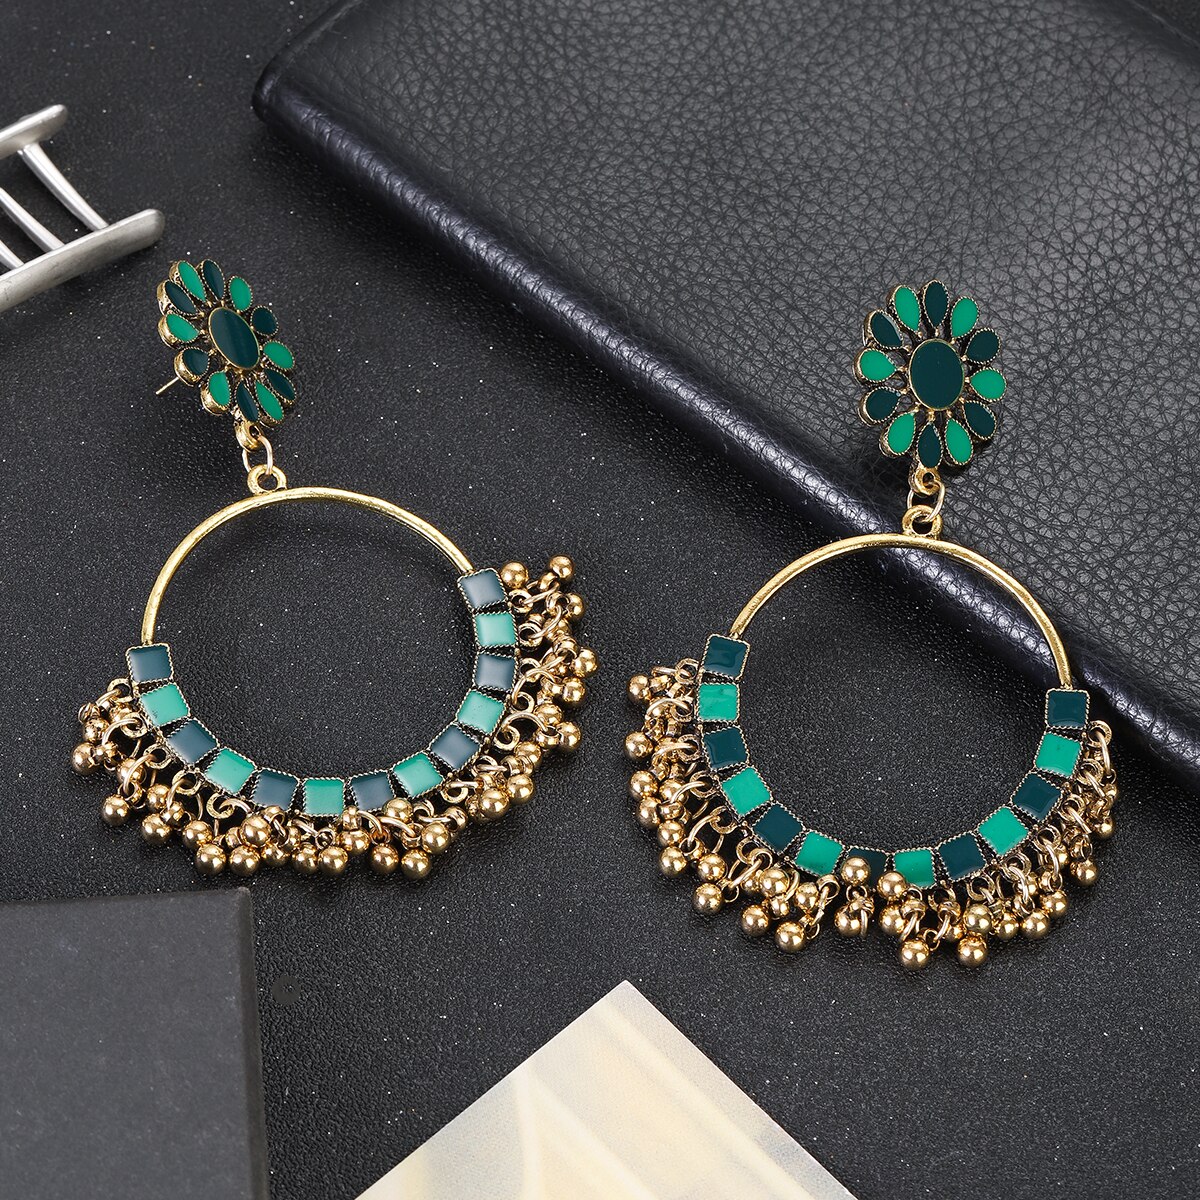 Ethnic-Vintage-Big-Round-Dangle-Earrings-for-Women-Boho-Green-Flower-Beads-Tassel-Earrings-Party-Jew-1005005057264367-11